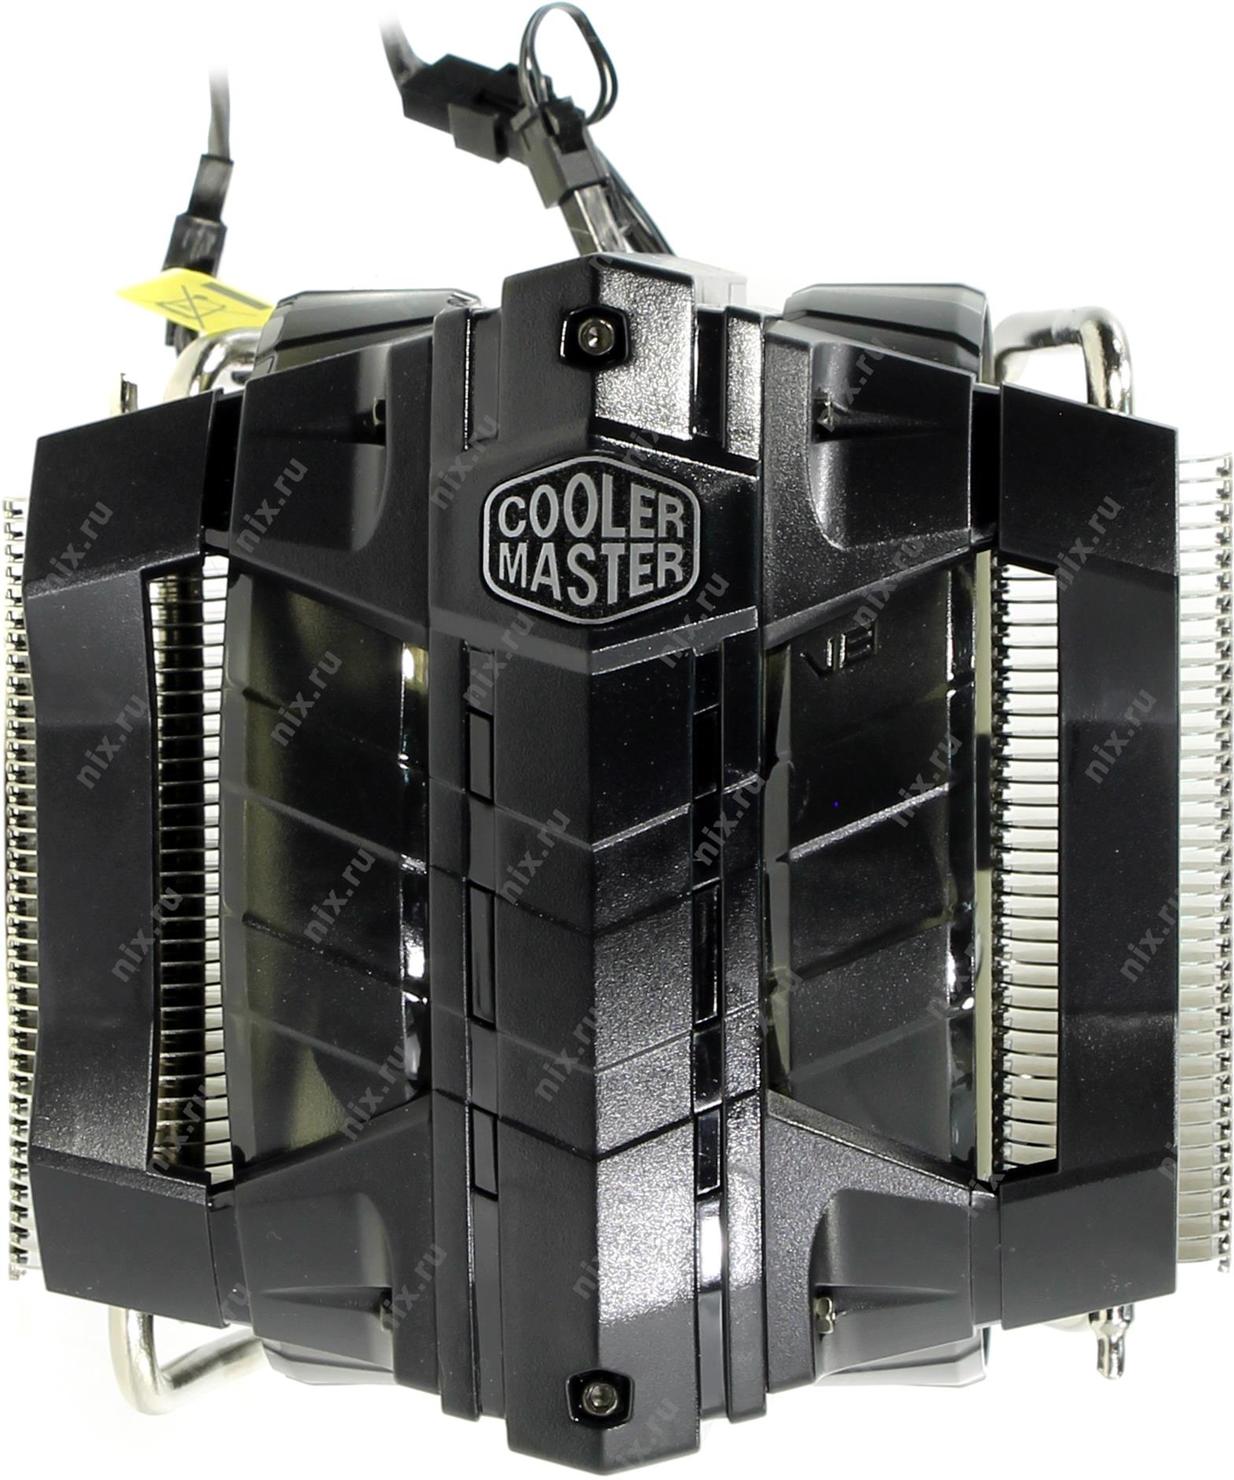 Rr master. Кулер для процессора Cooler Master v8 ver.2. Кулер для процессора Coolermaster Master v8 ver.2 [RR-v8vc-16pr-r2]. Cooler Master v8 ver.2 сокет. Cooler Master v8 GTS RR-v8vc-16pr-r1 Red.